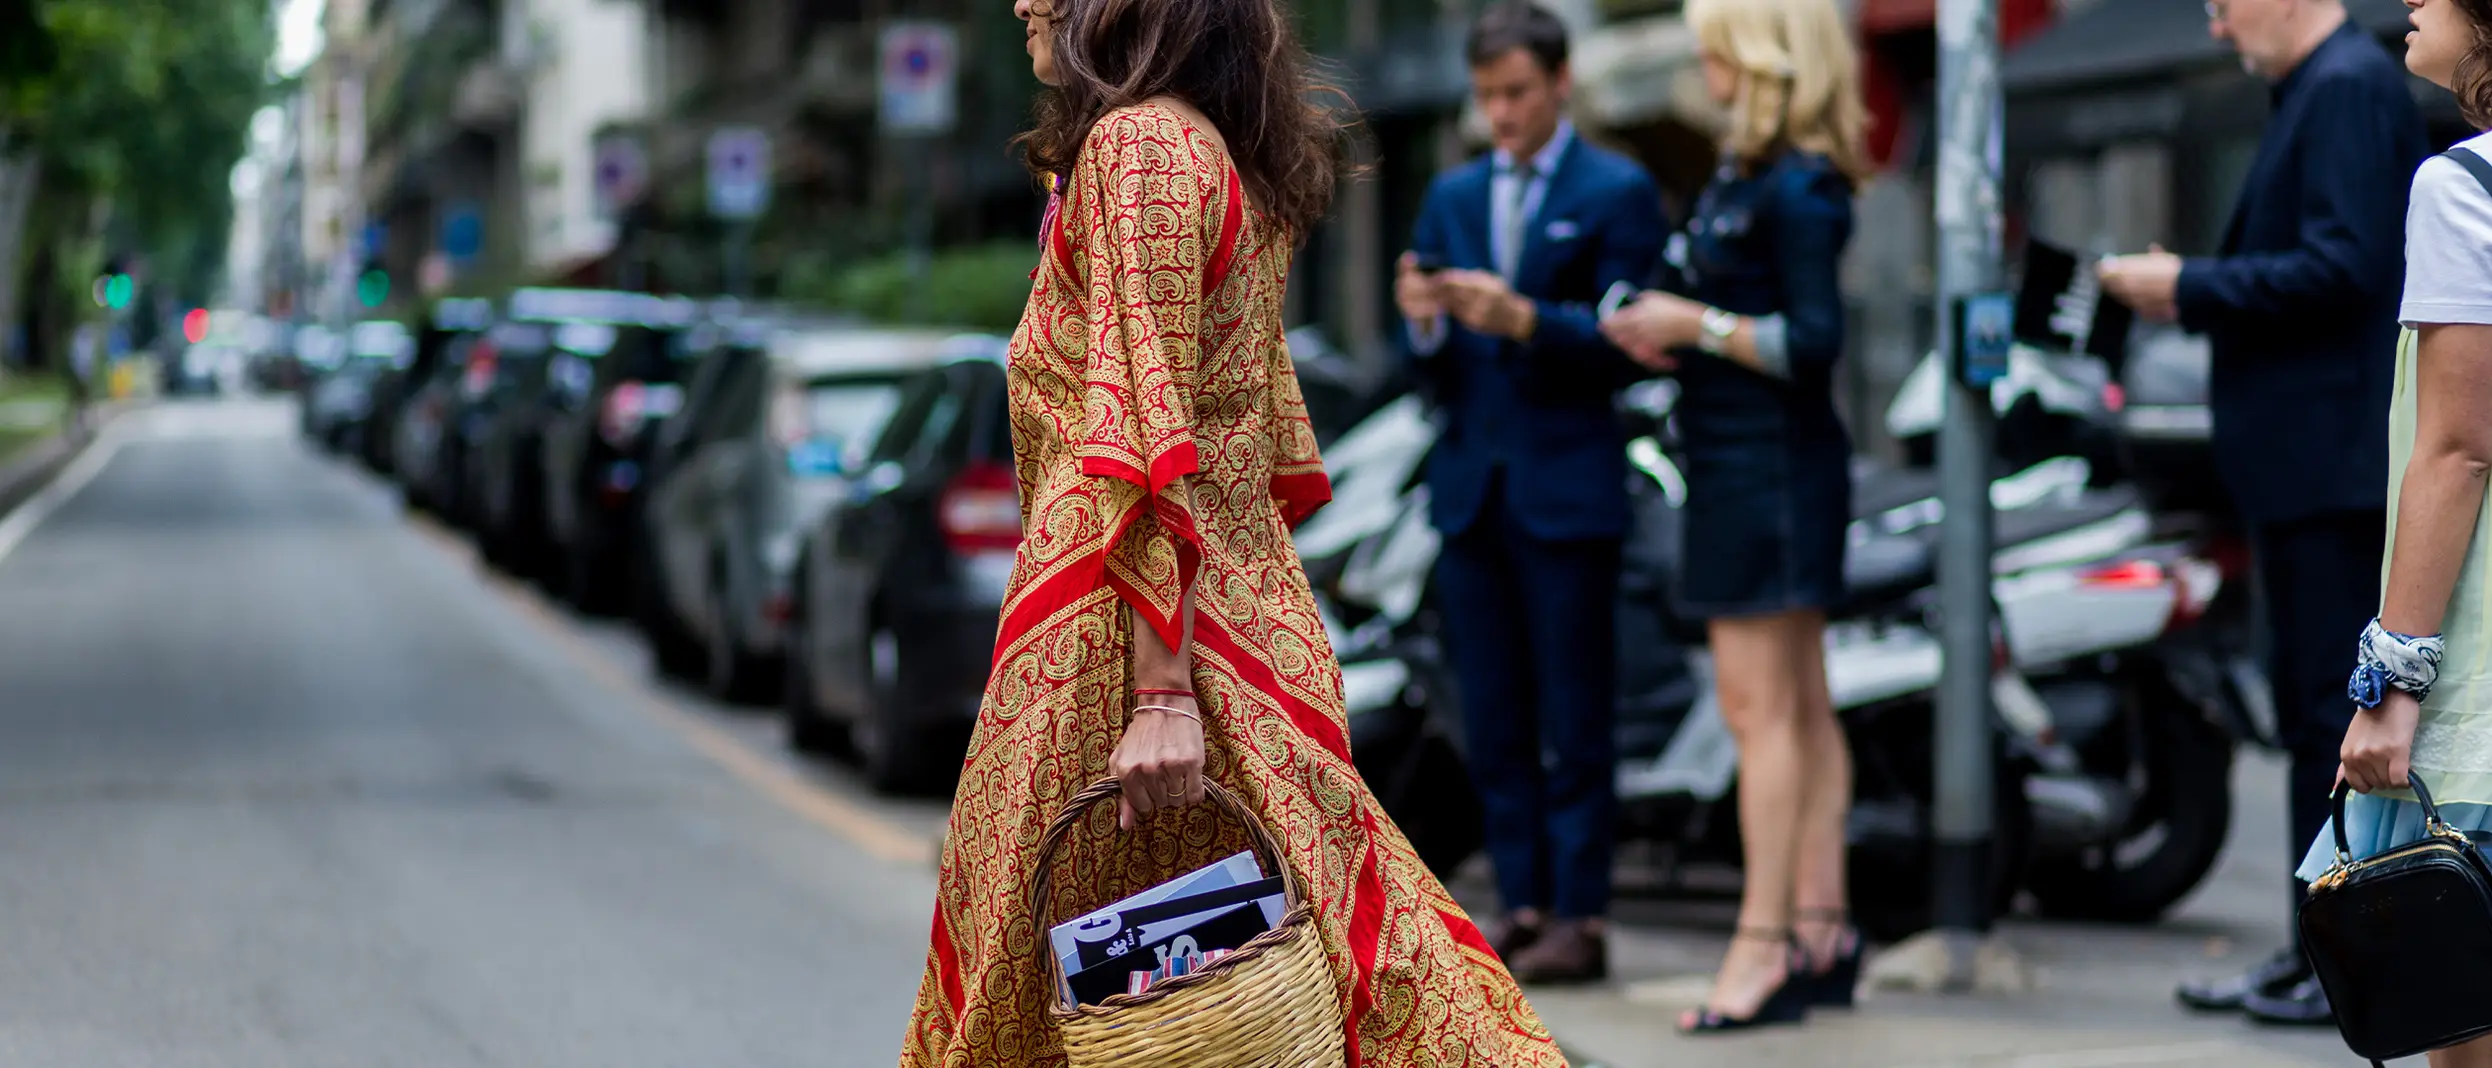 woman-walking-in-dress-and-basket-bag.jpg